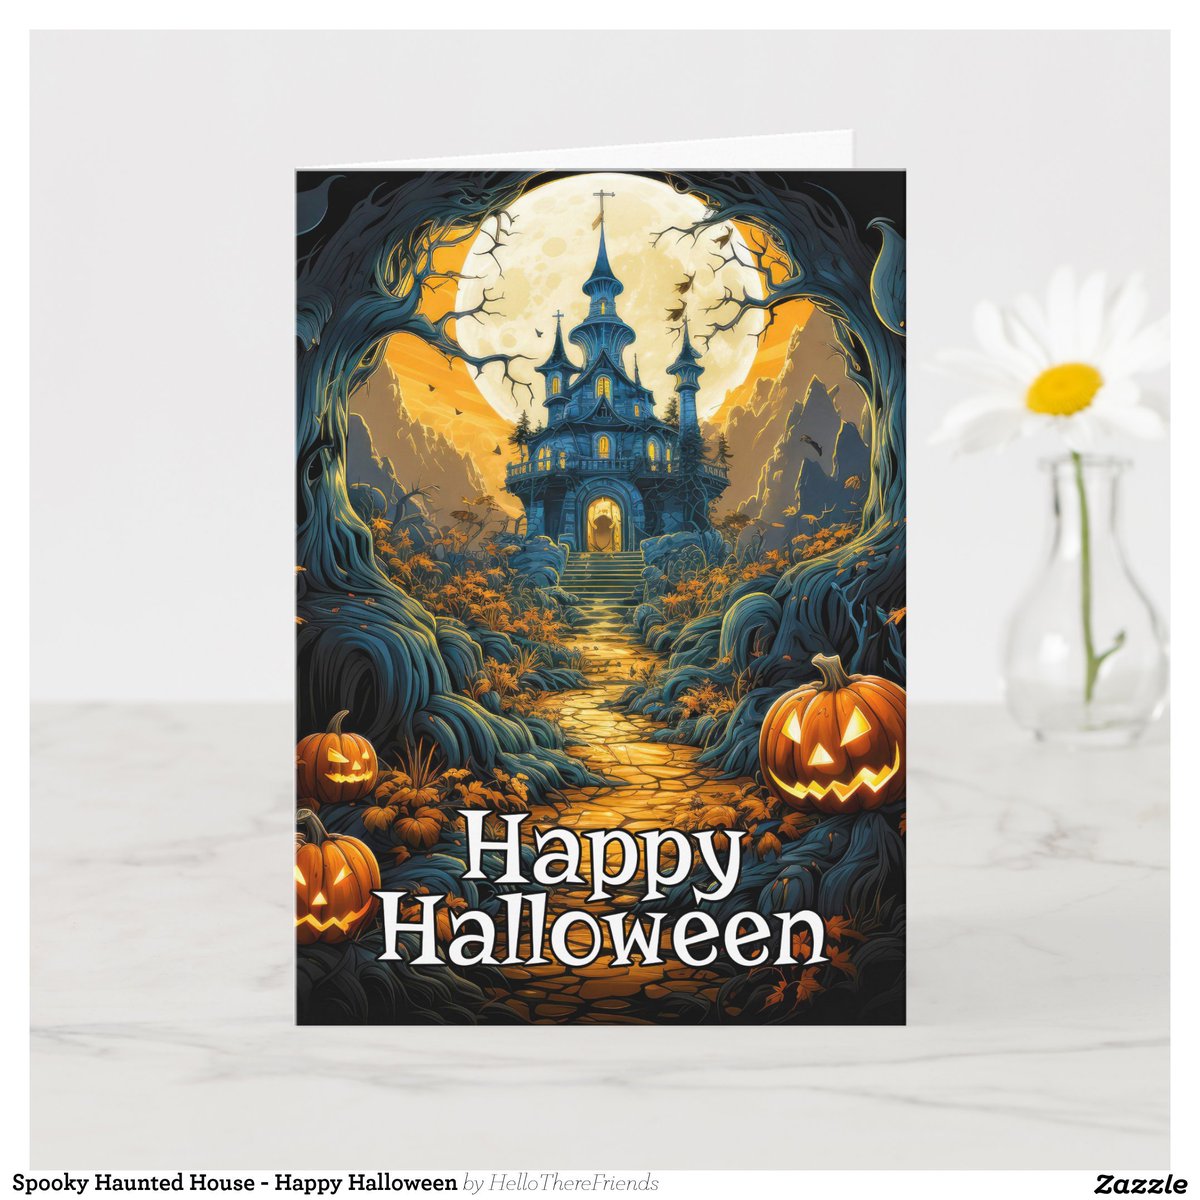 Spooky Haunted House - Happy Halloween Card→zazzle.com/z/aacjipc3?rf=…

#GreetingCards #HalloweenCards #HappyHalloween #Pumpkins #Horror #HalloweenArt #TrickOrTreat #HauntedHouse #HappyHalloweenCards #Macabre